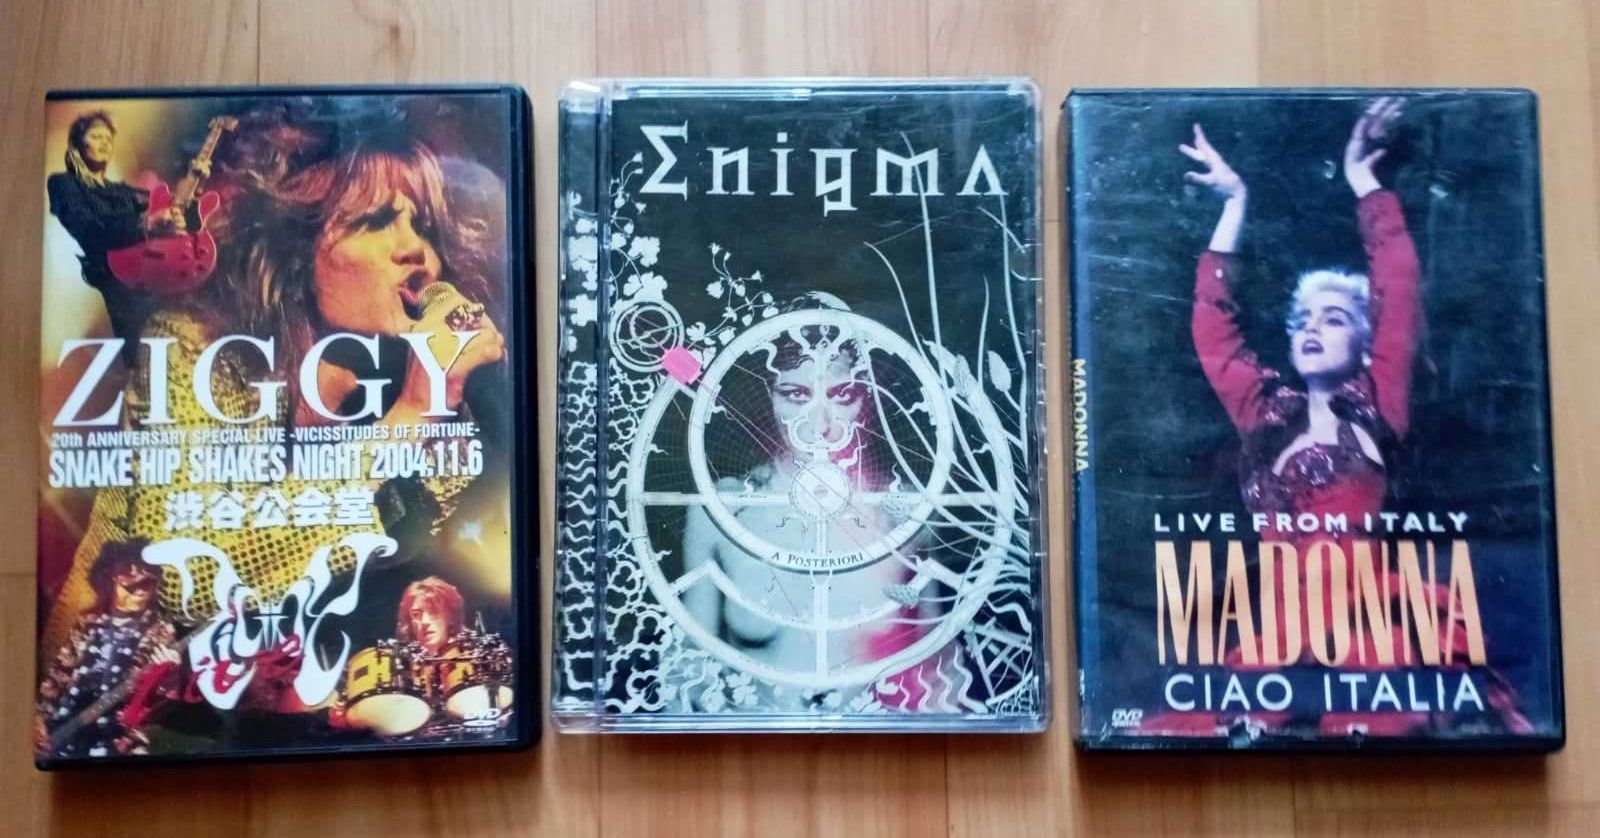 DVD  музыка ZIGGY, ENIGMA, Madonna